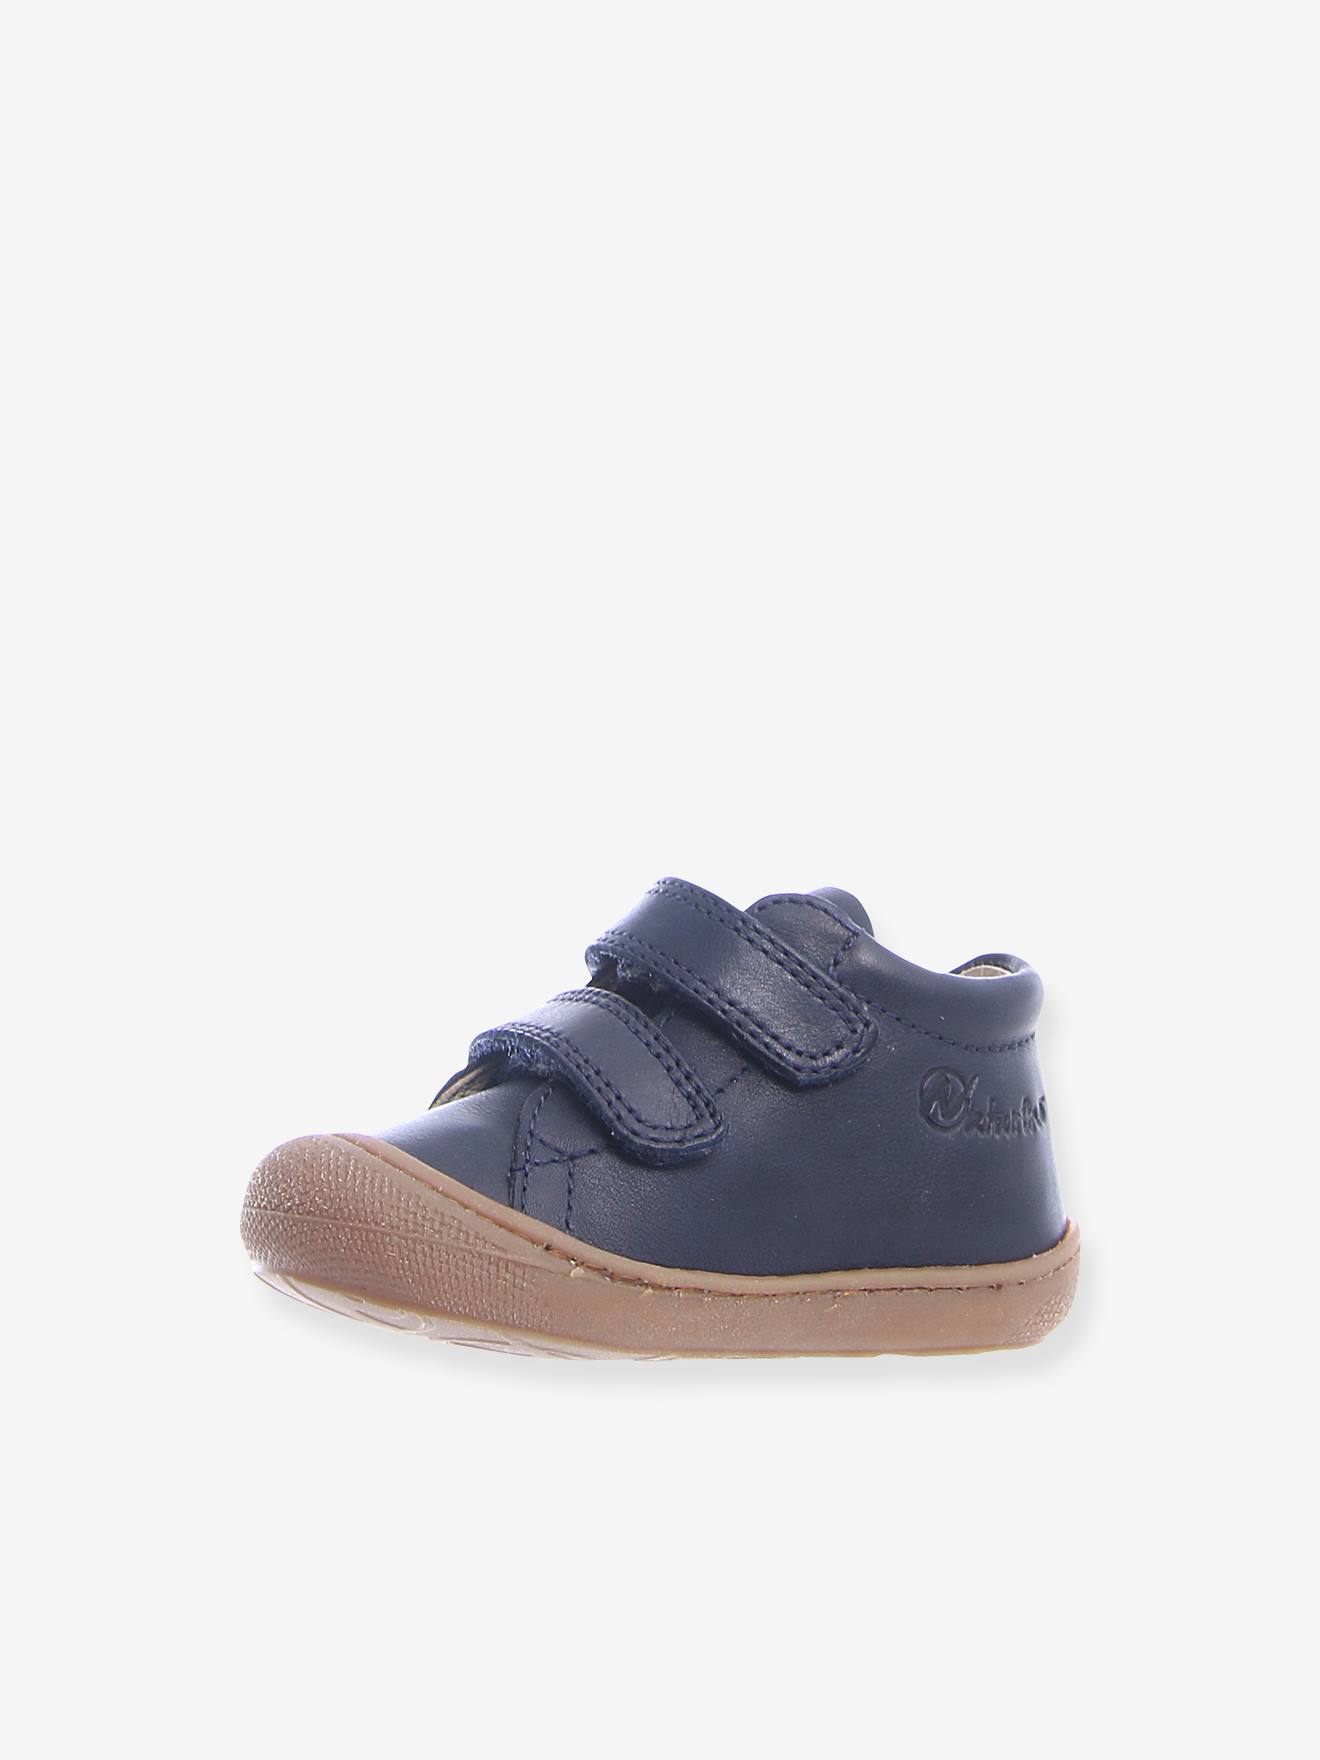 Babyschuhe Junge Mädchen Schnürsenkel Sneakers Turnschuhe Lauflernschuhe Schuhe 